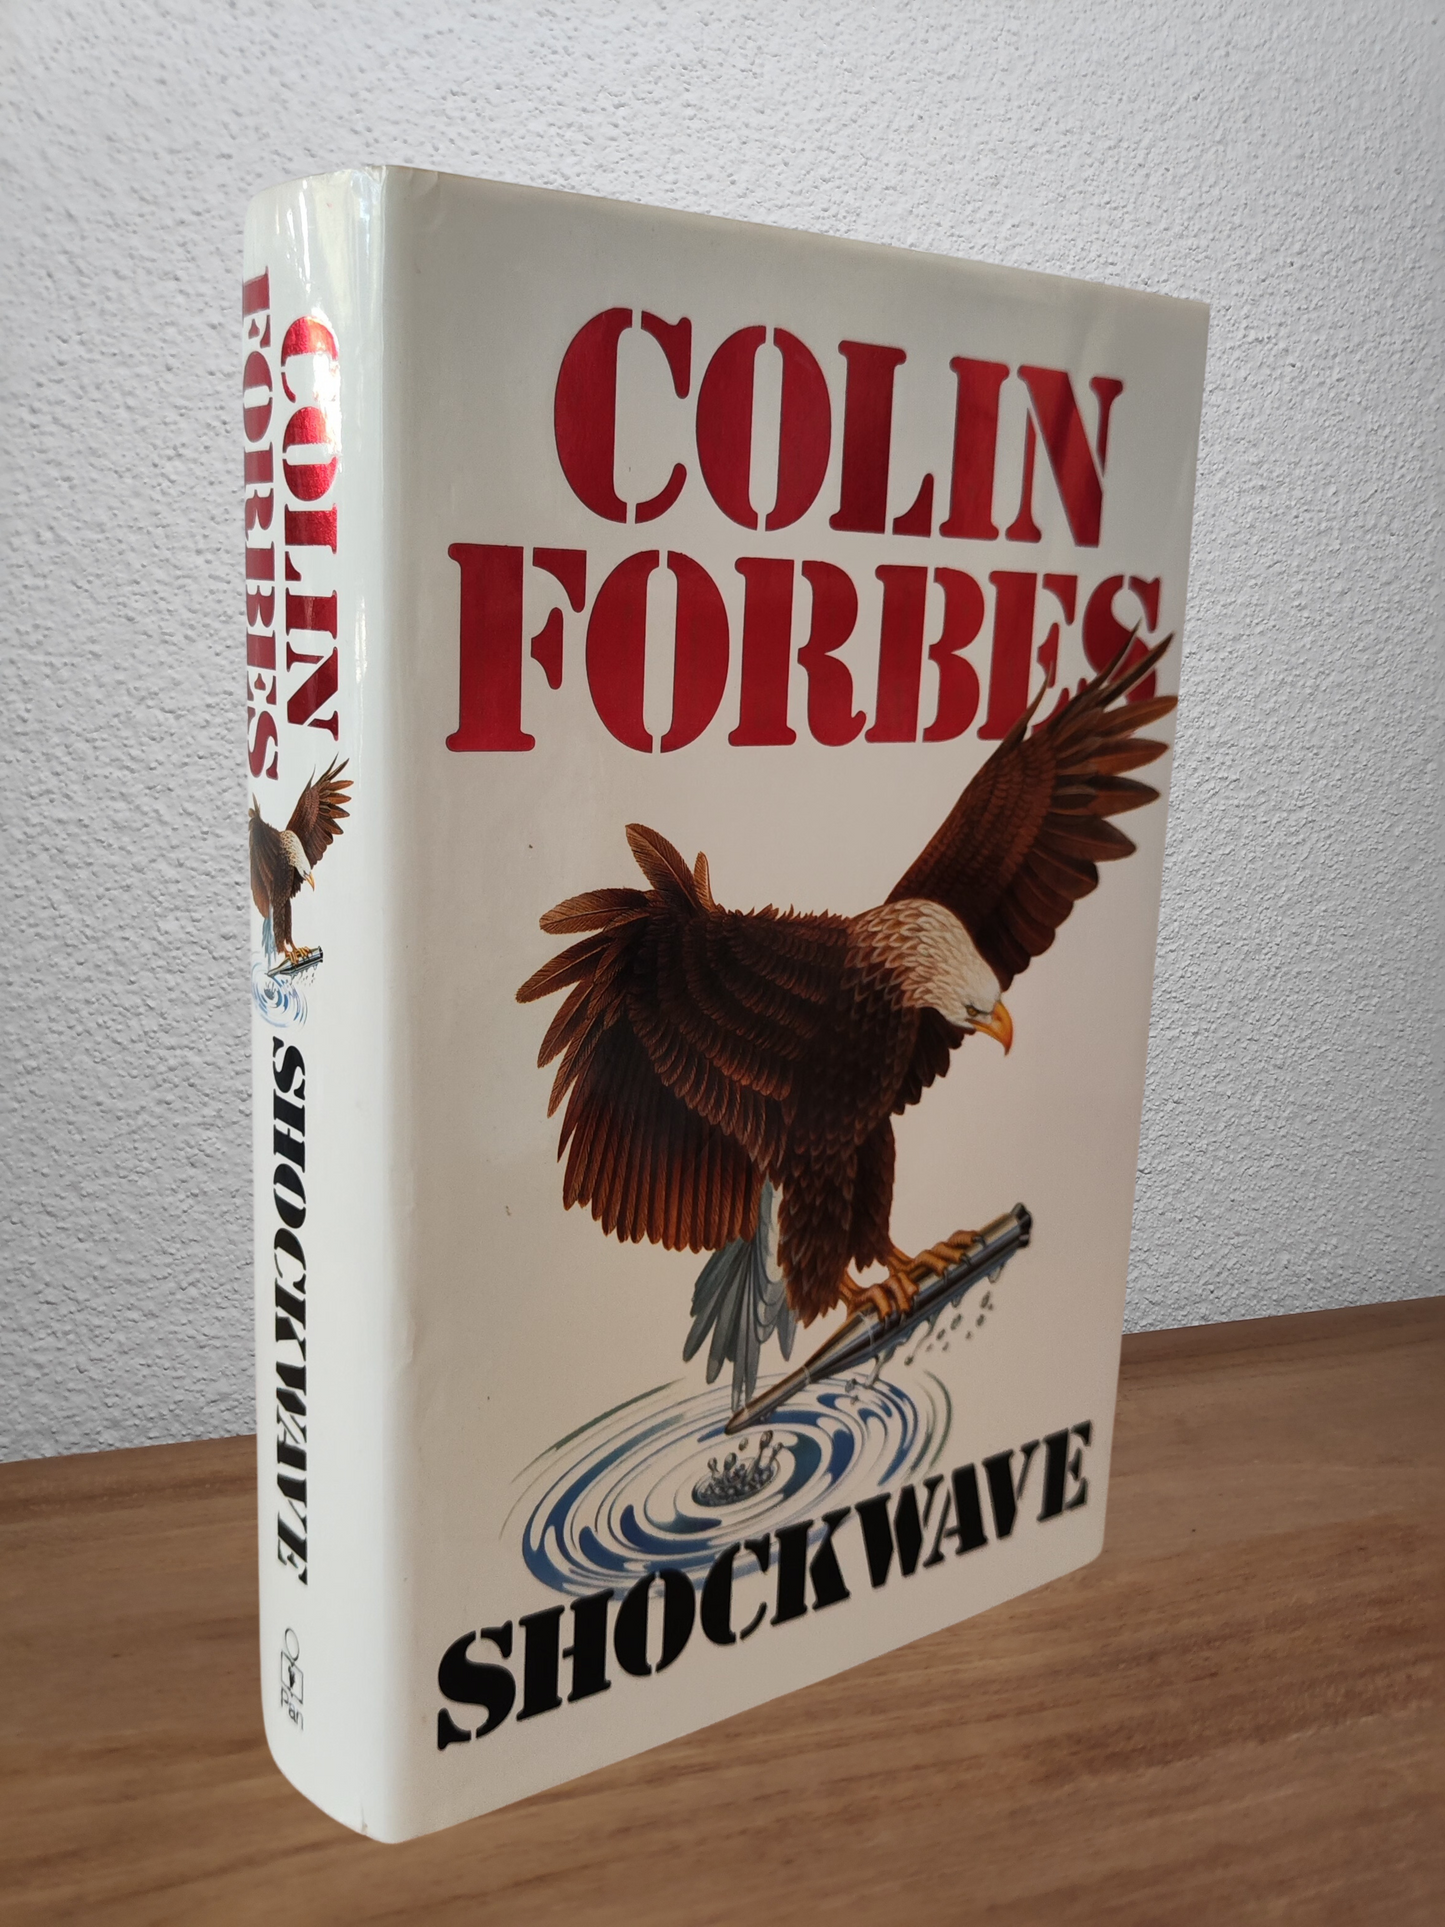 Colin Forbes - Shockwave (Tweed & Co. #7)